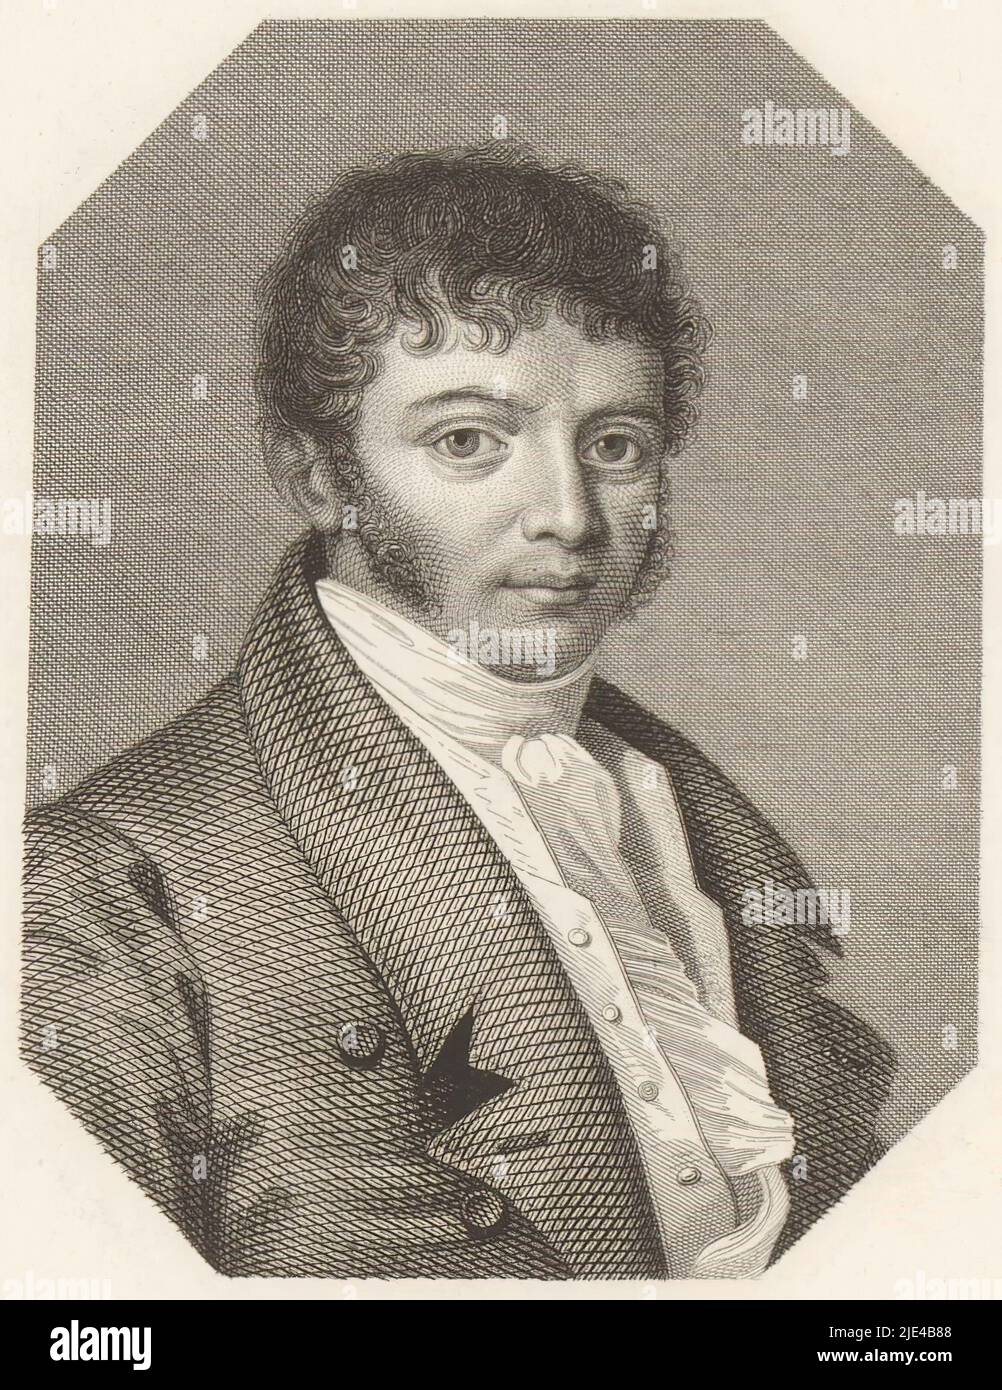 Portrait of Carl Franz van der Velde, Hans Rudolf Rahn, 1829, print maker: Hans Rudolf Rahn, (mentioned on object), 1829, paper, steel engraving, h 155 mm - w 114 mm Stock Photo